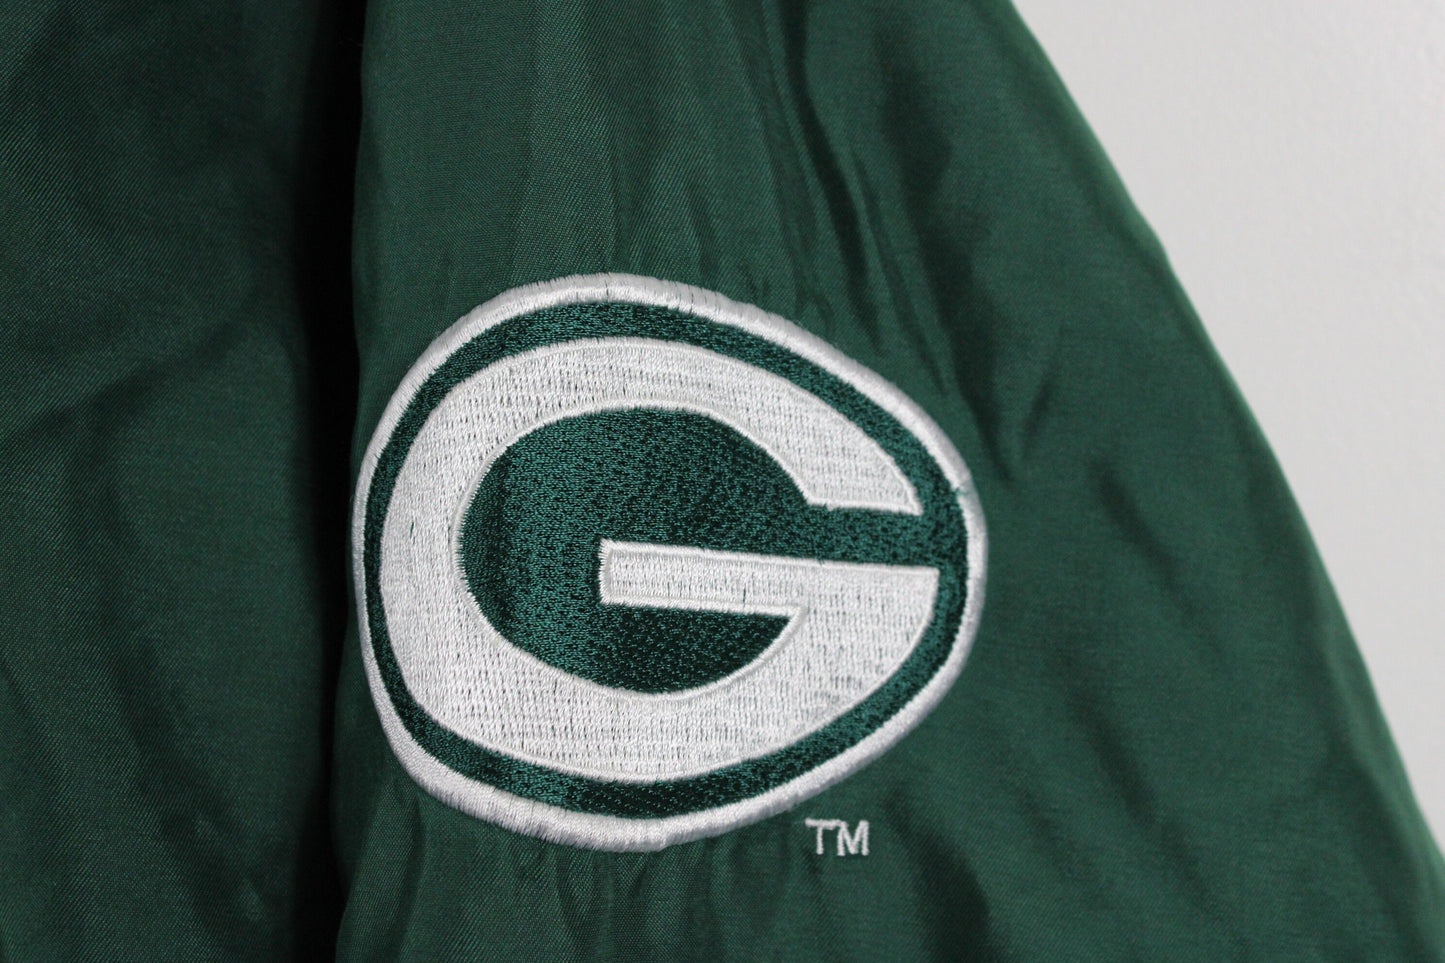 Green-Bay-Packers Jacket / Vintage Reebok NFL Proline Football Coat / 90s Champion Sports Team Graphic